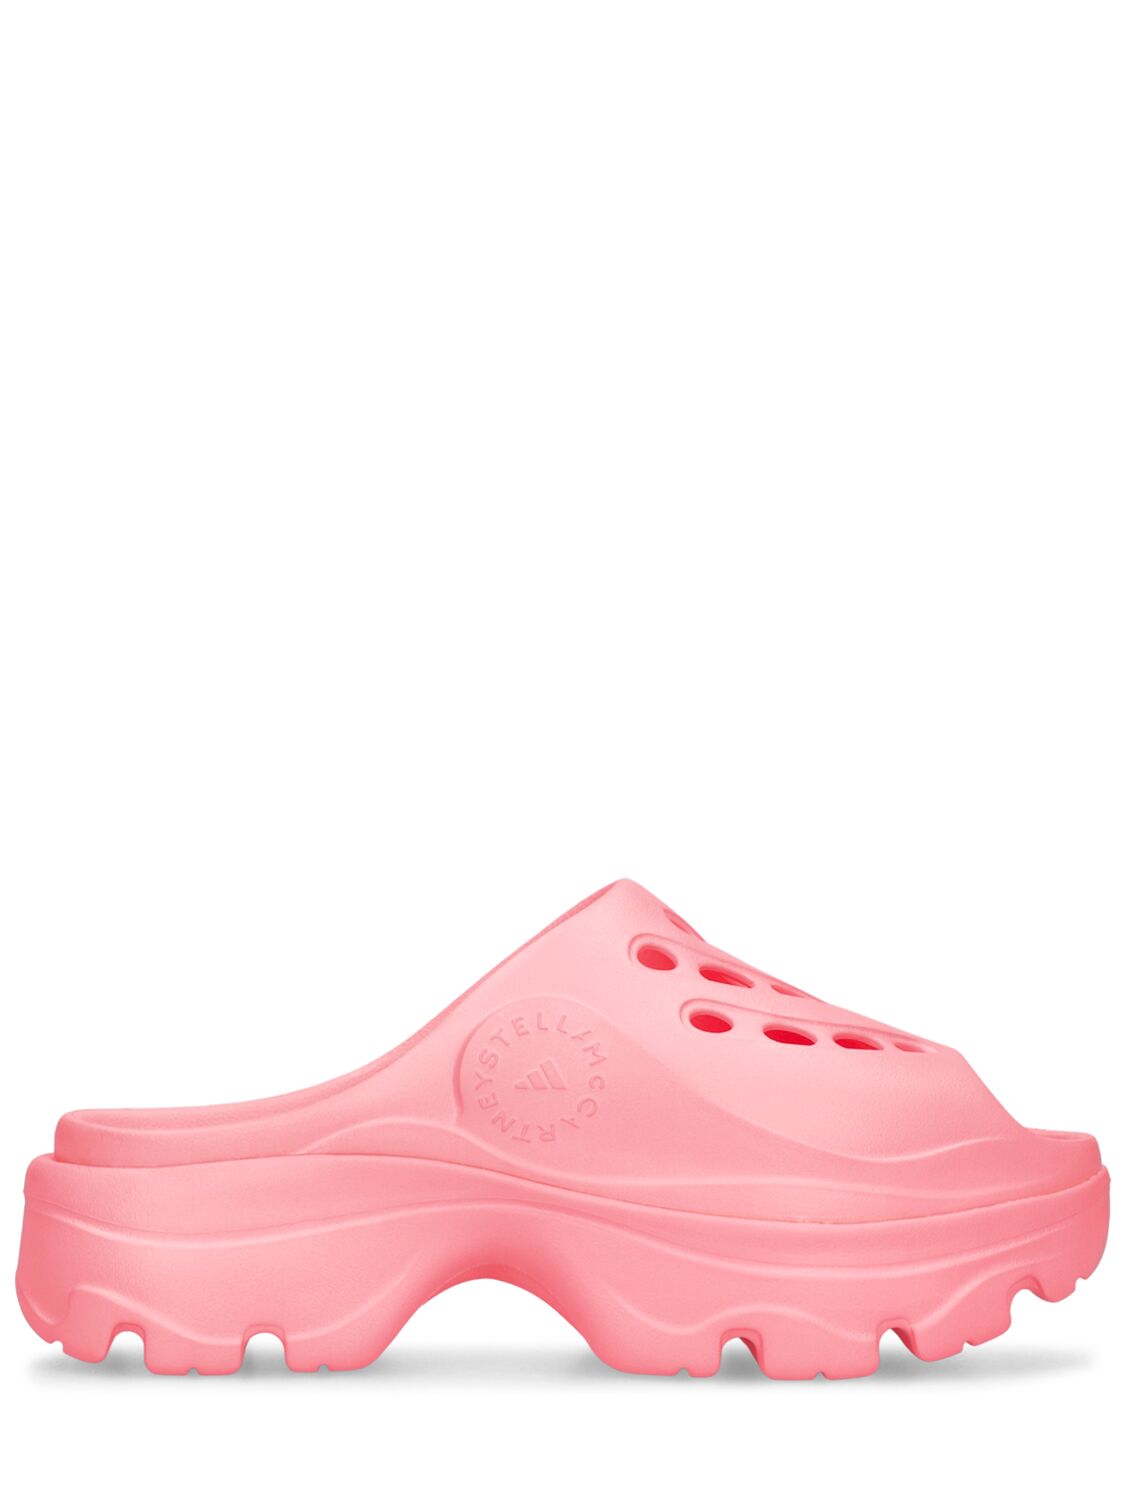 Adidas By Stella Mccartney Clog Sandals In Pink